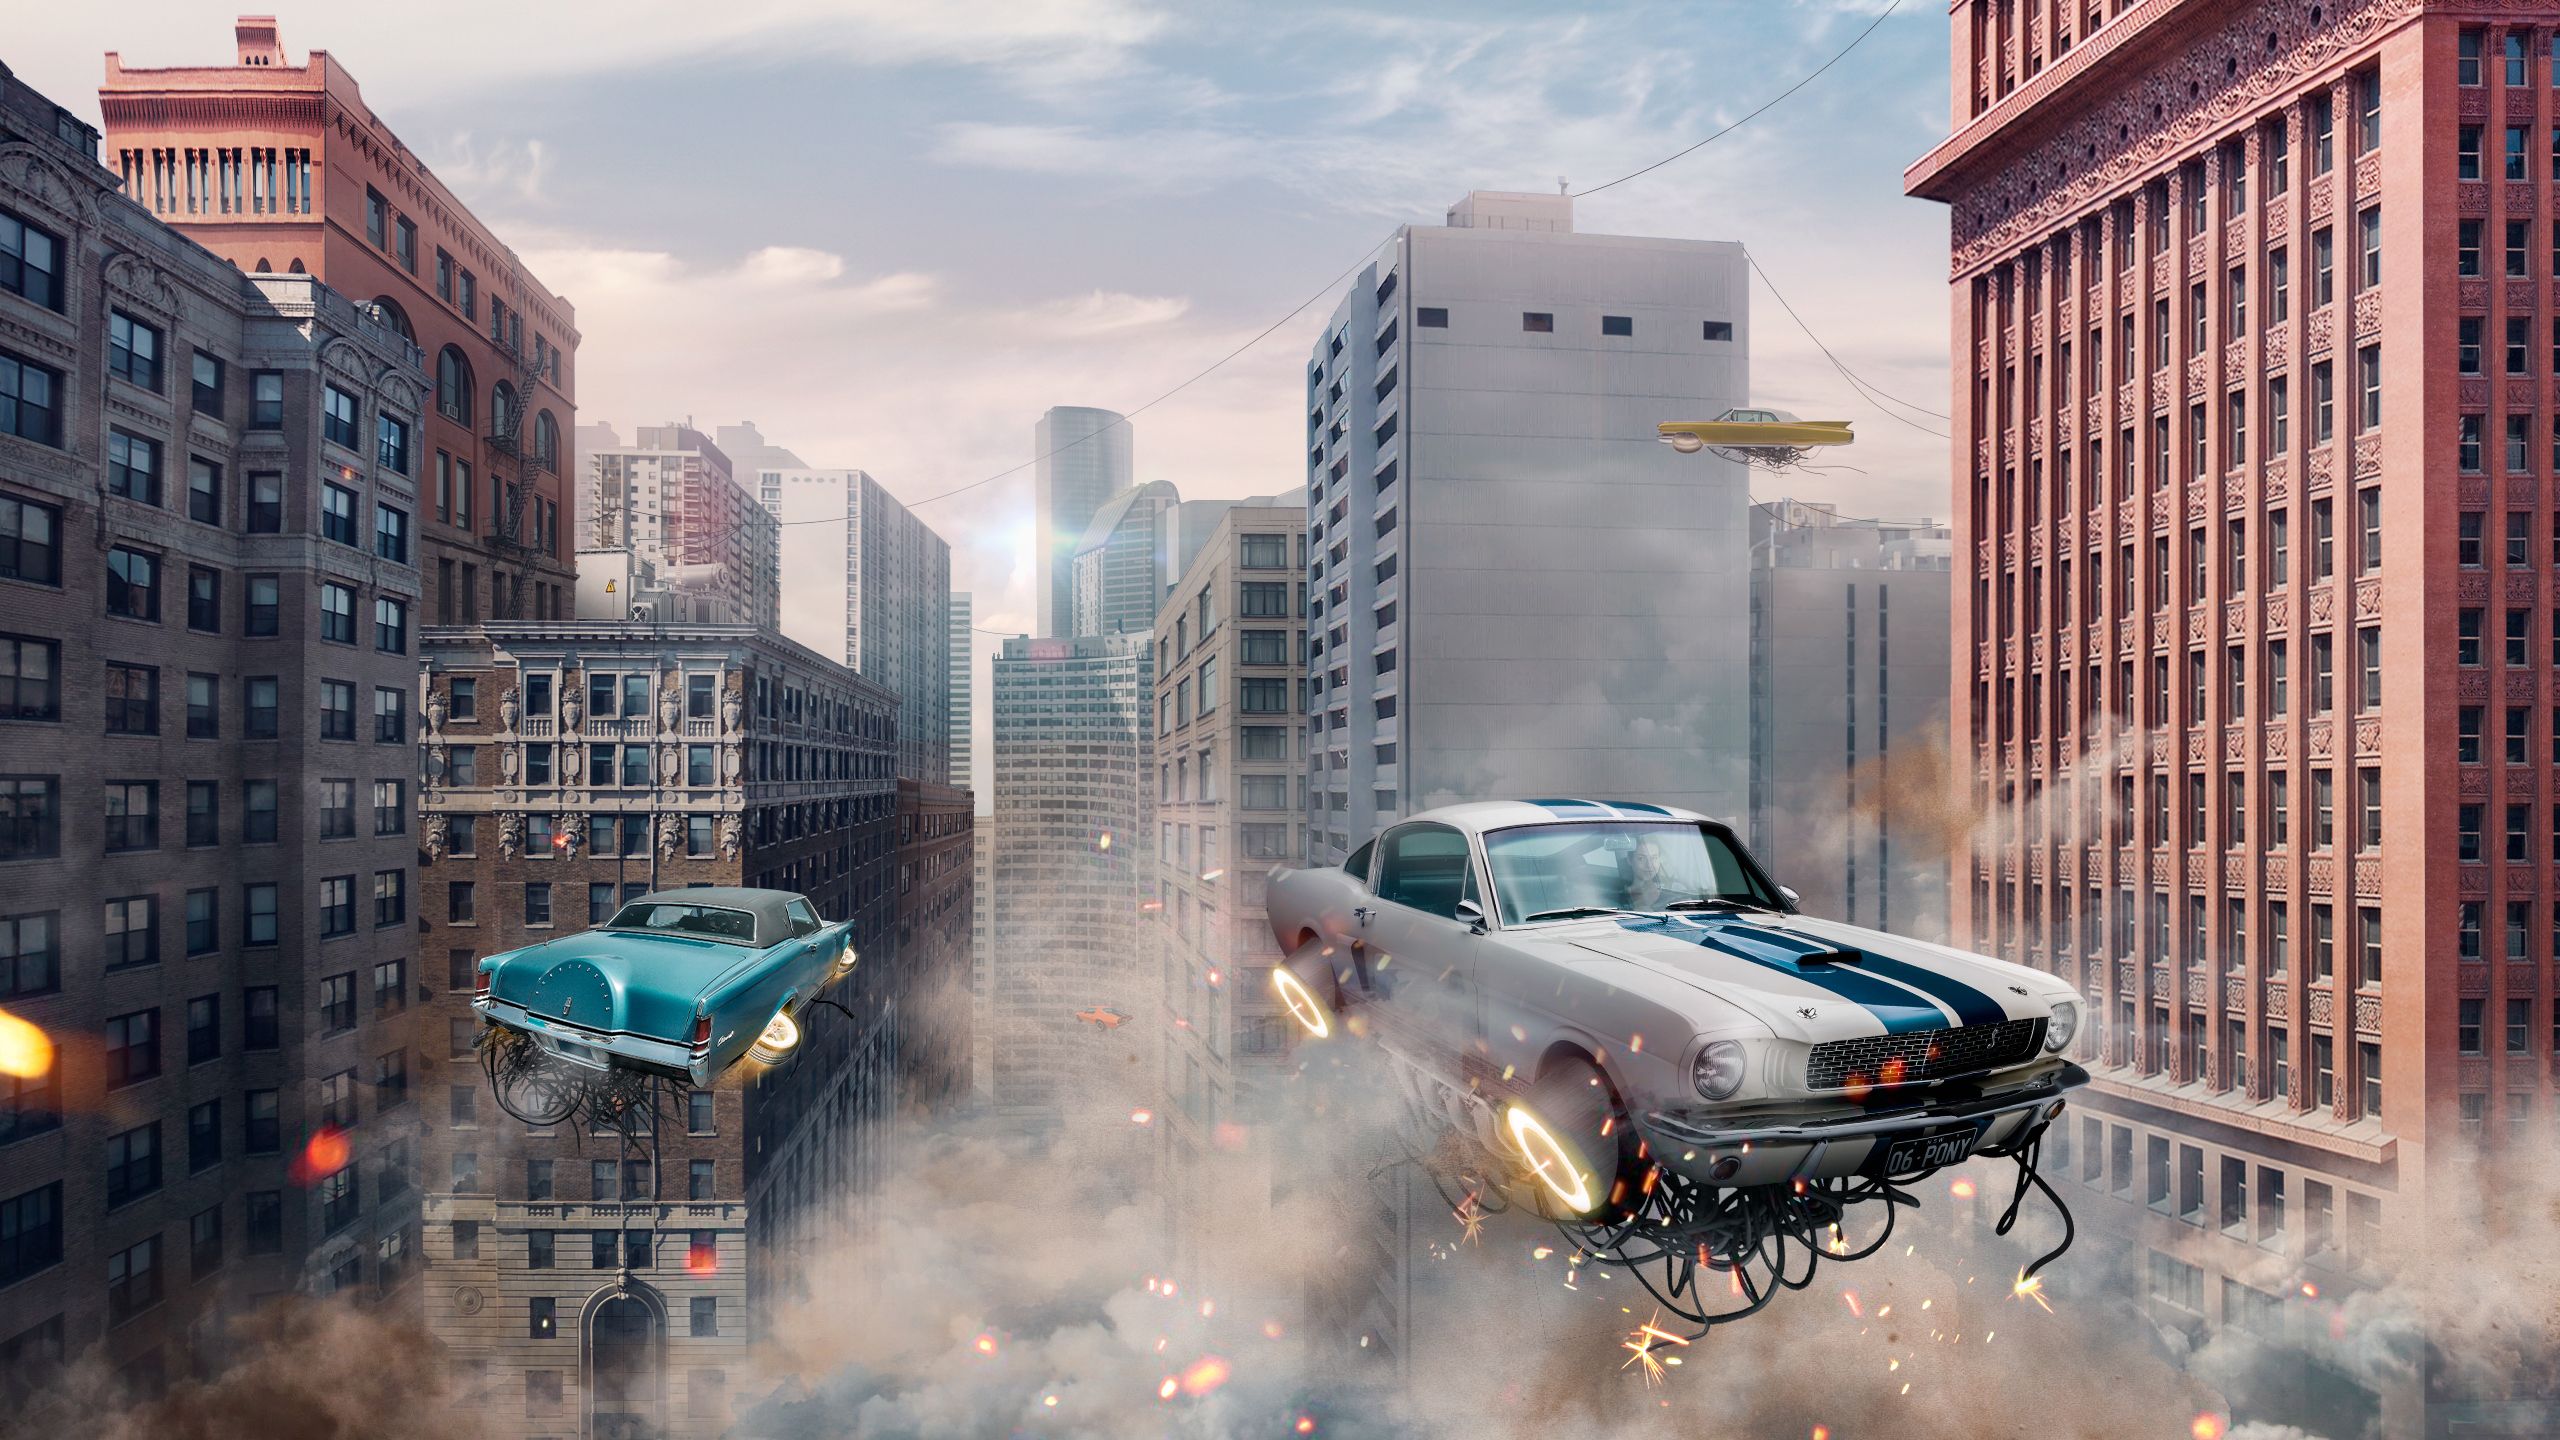 Retro Futuristic Cars Flying In The City 1440P